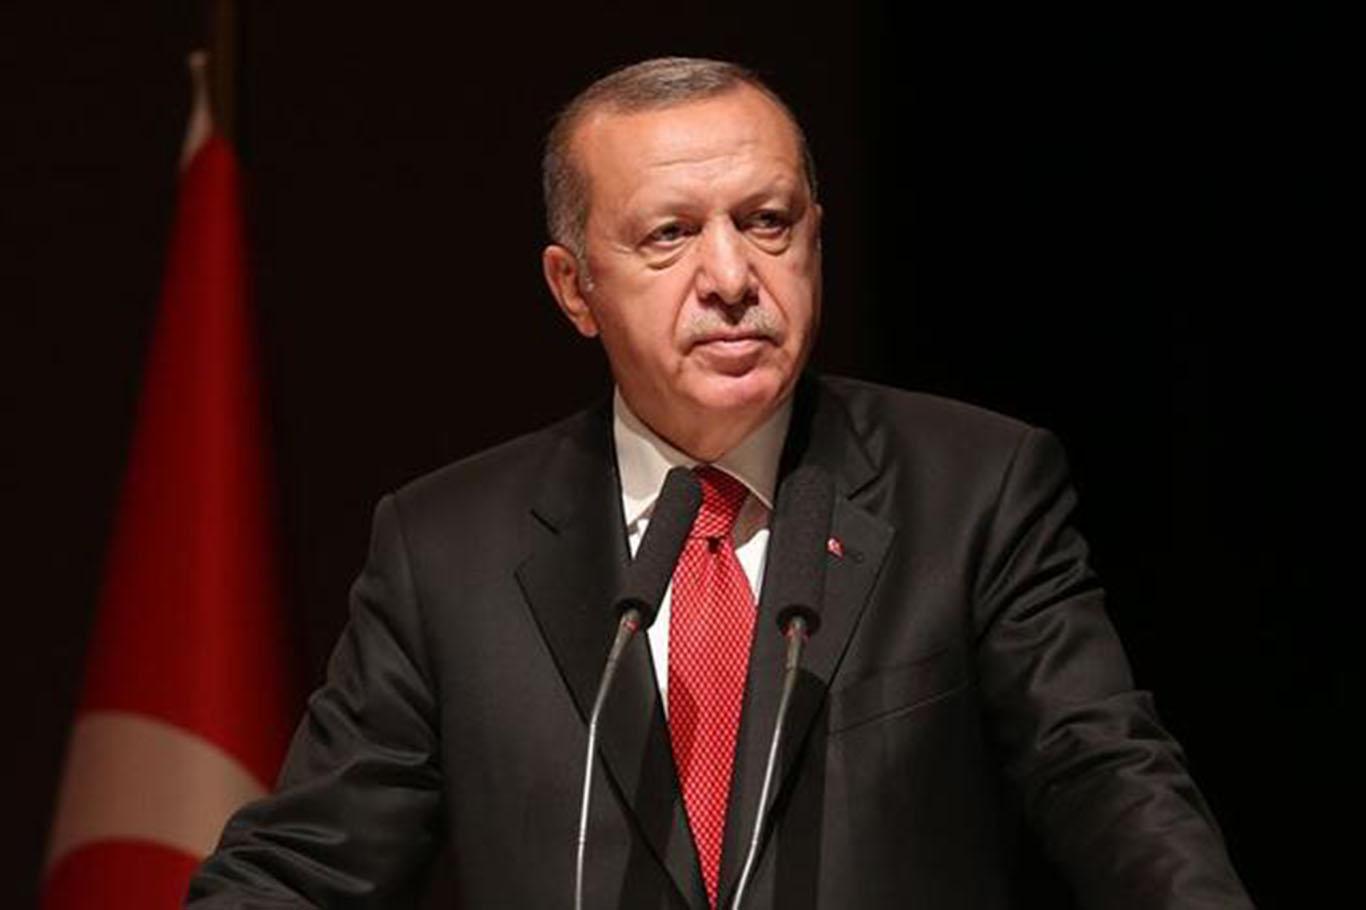 Türkiye successfully overcomes post-pandemic challenges, Erdoğan says